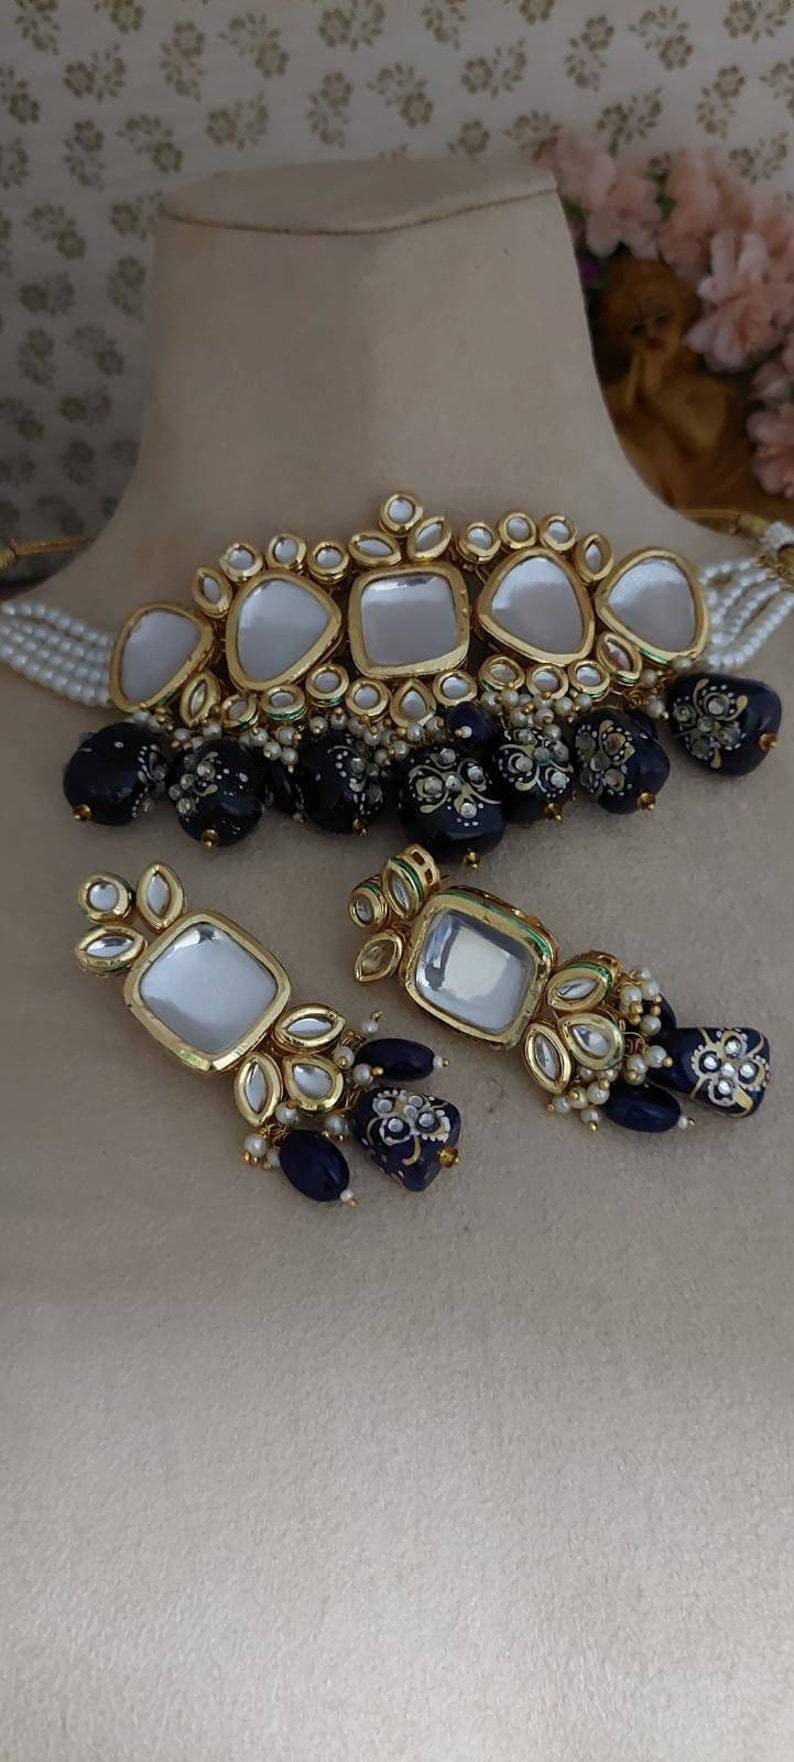 Kundan Necklace, Indian Jewelry, Indian Wedding Jewelry, Ethnic Jewelry Design, Kundan Jewelry Set, Bridal Jewelry Set, Sabyasachi Necklace | Save 33% - Rajasthan Living 14